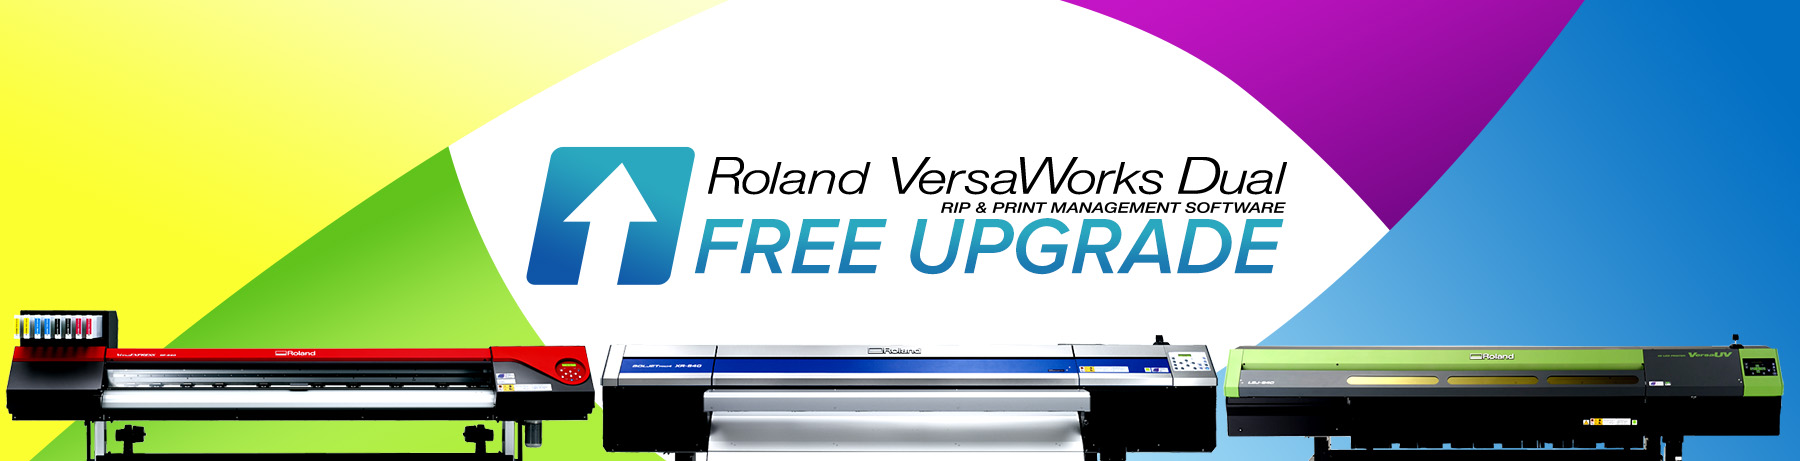 Roland VersaWorks Dual RIP Software Upgrade image